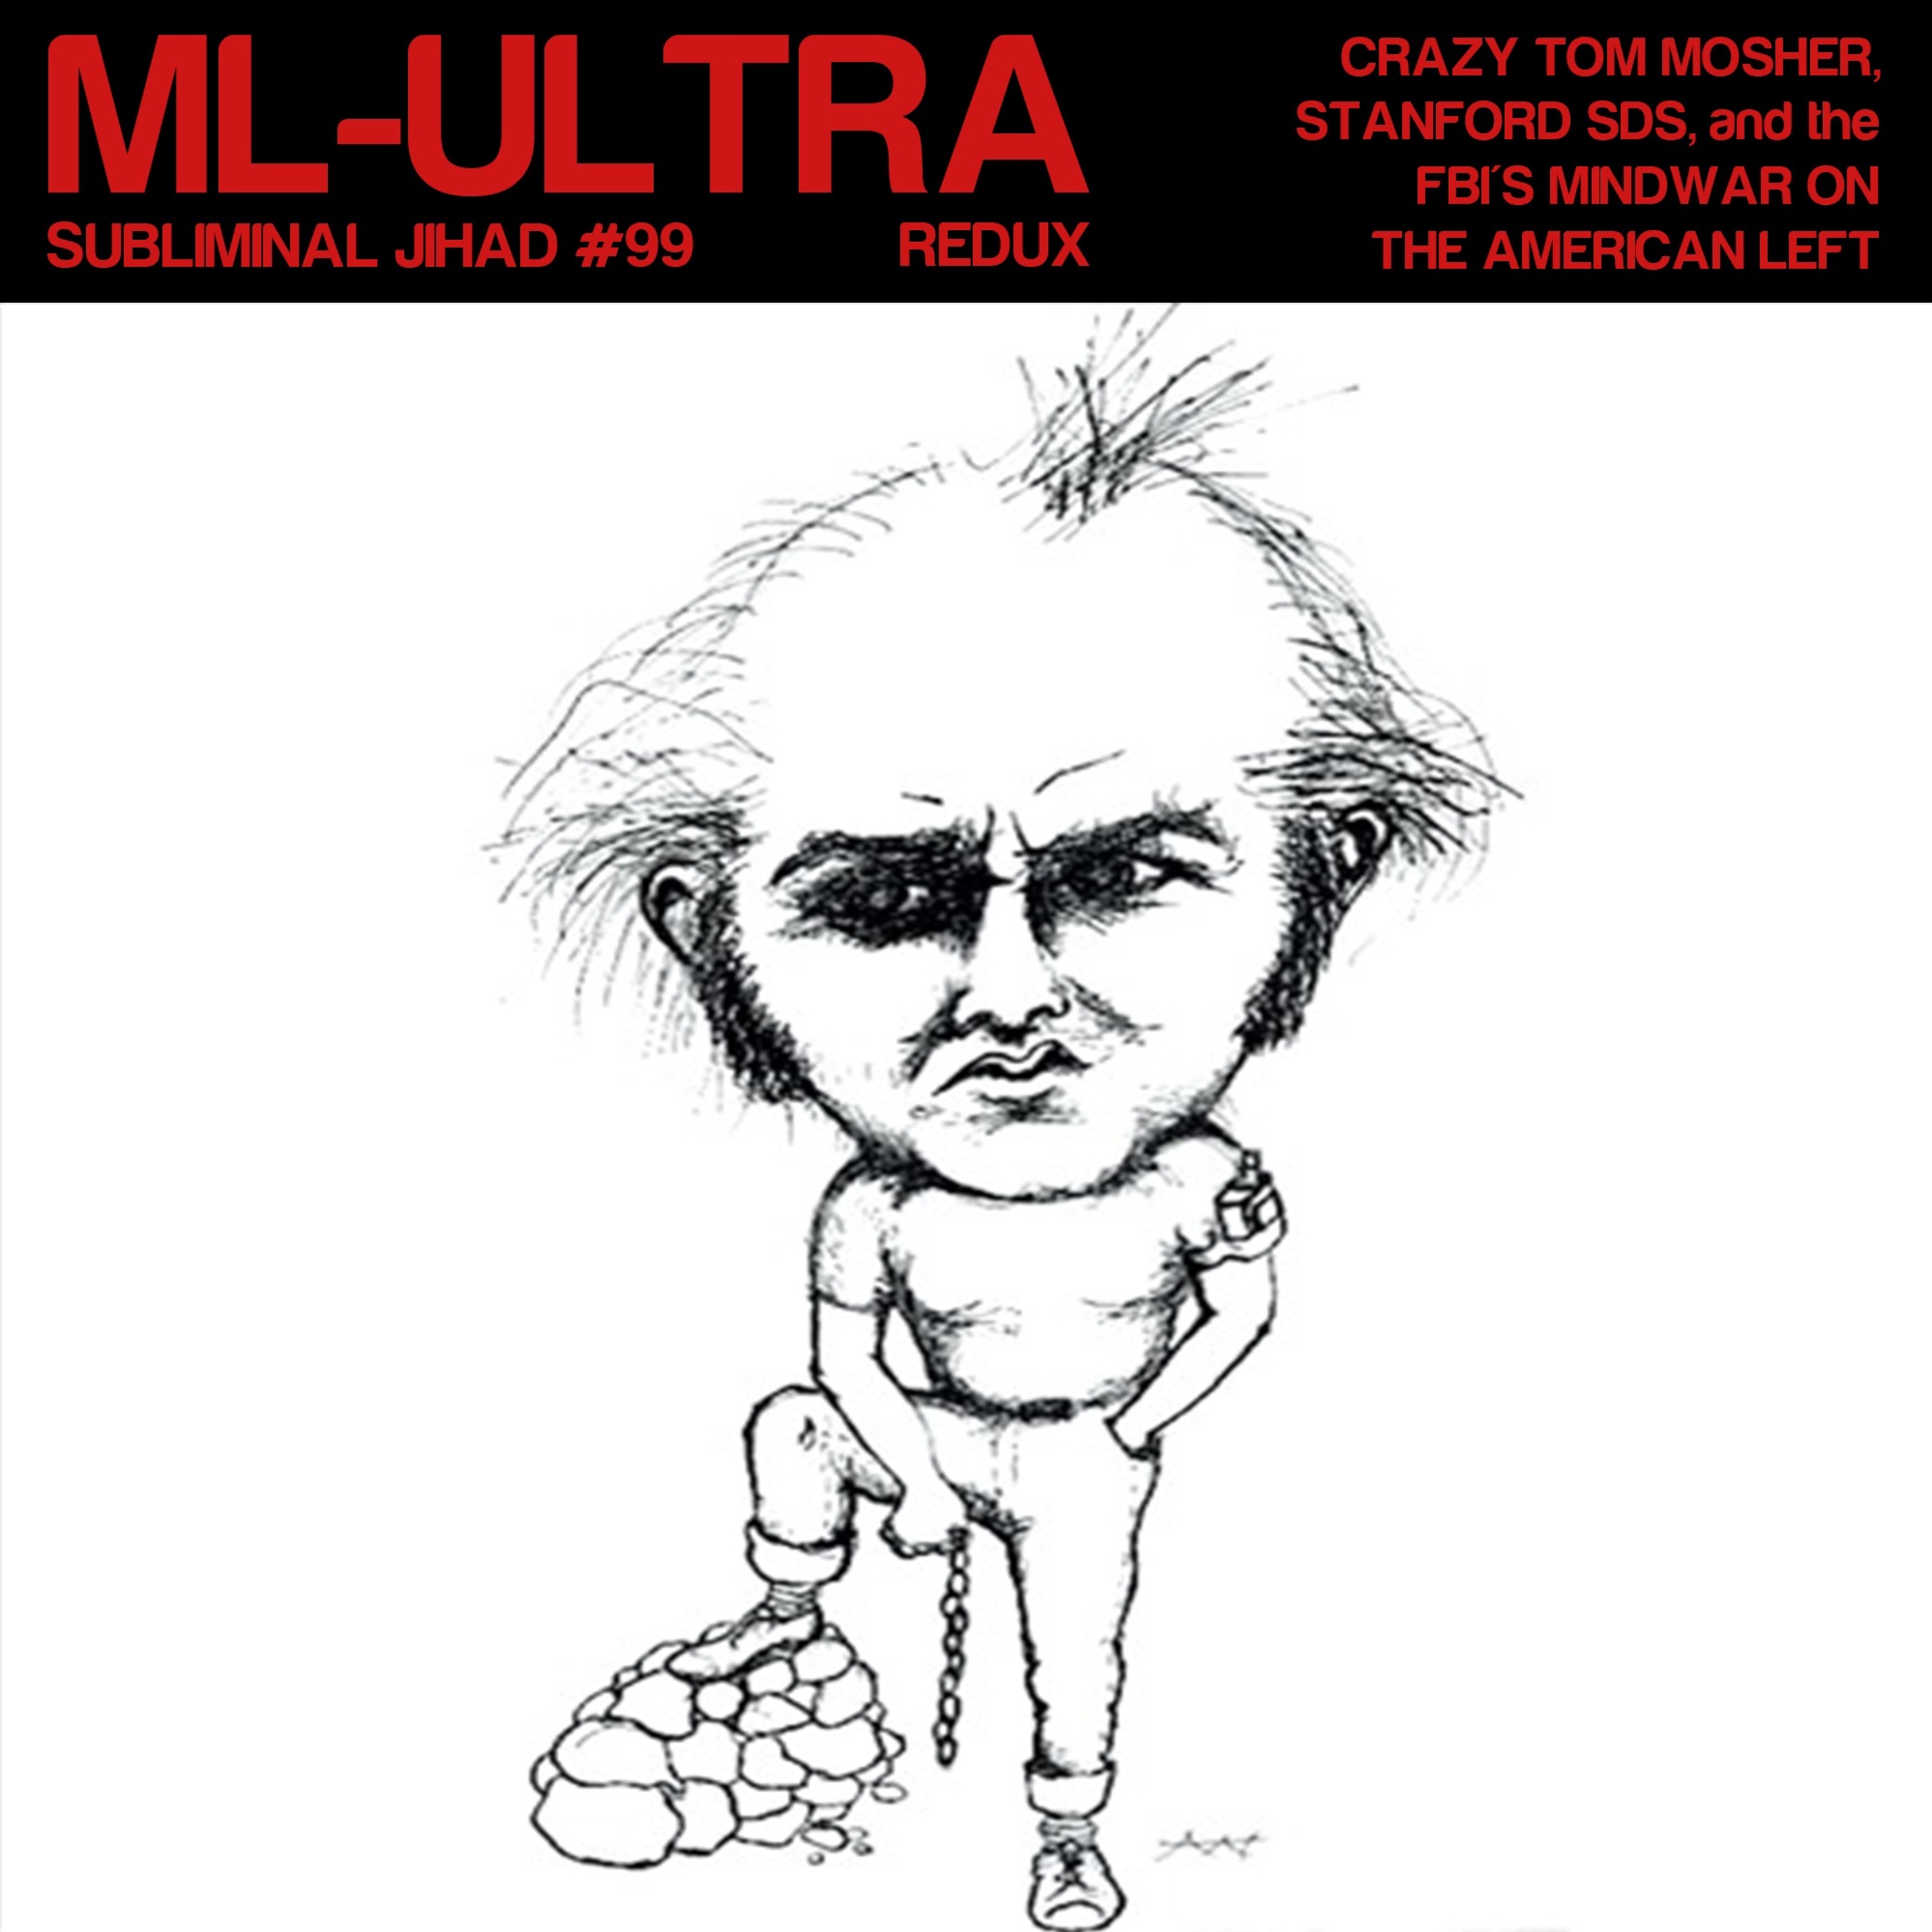 *UNLOCKED* [#99] ML-ULTRA: Crazy Tom Mosher, Stanford SDS, & the FBI MindWar on the American Left